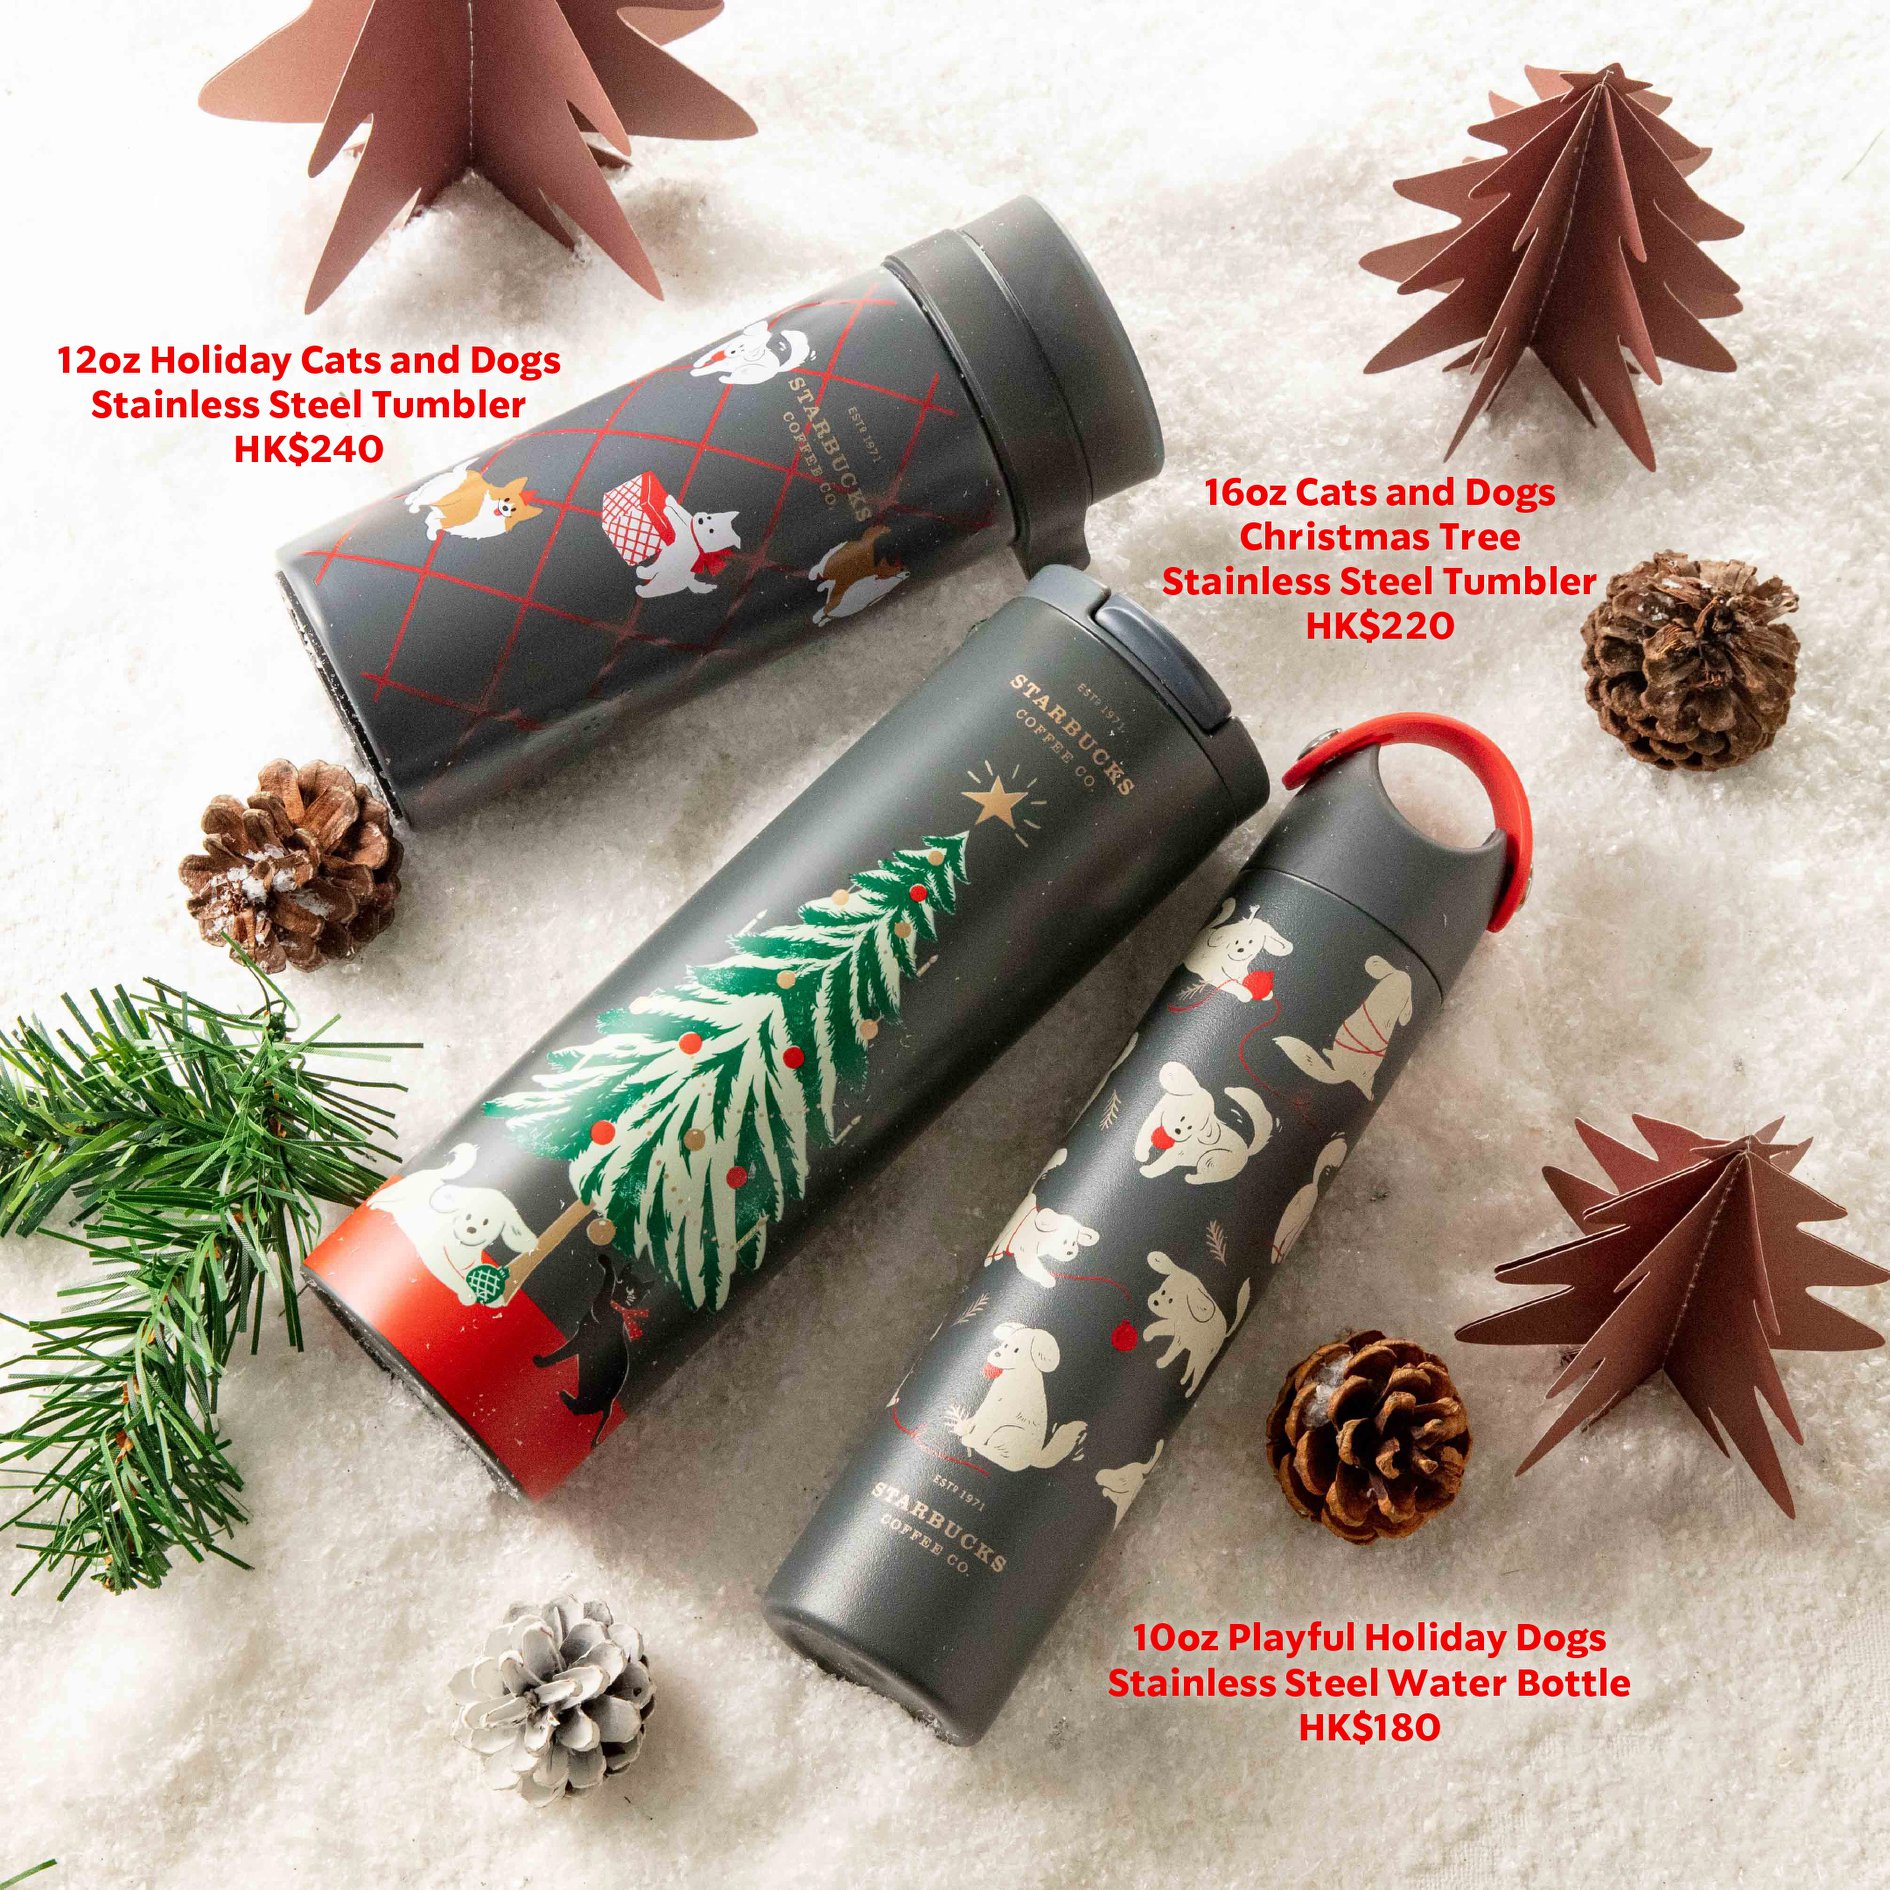 您準備好於佳節與好友交換聖誕禮物嗎？星巴克聖誕系列商品是您送禮的首選🎁 Ready for this year's Secret Santa? Surprise your friends with the best gifts from the Christmas Series merchandise collection  🎁 #StarbucksHK...